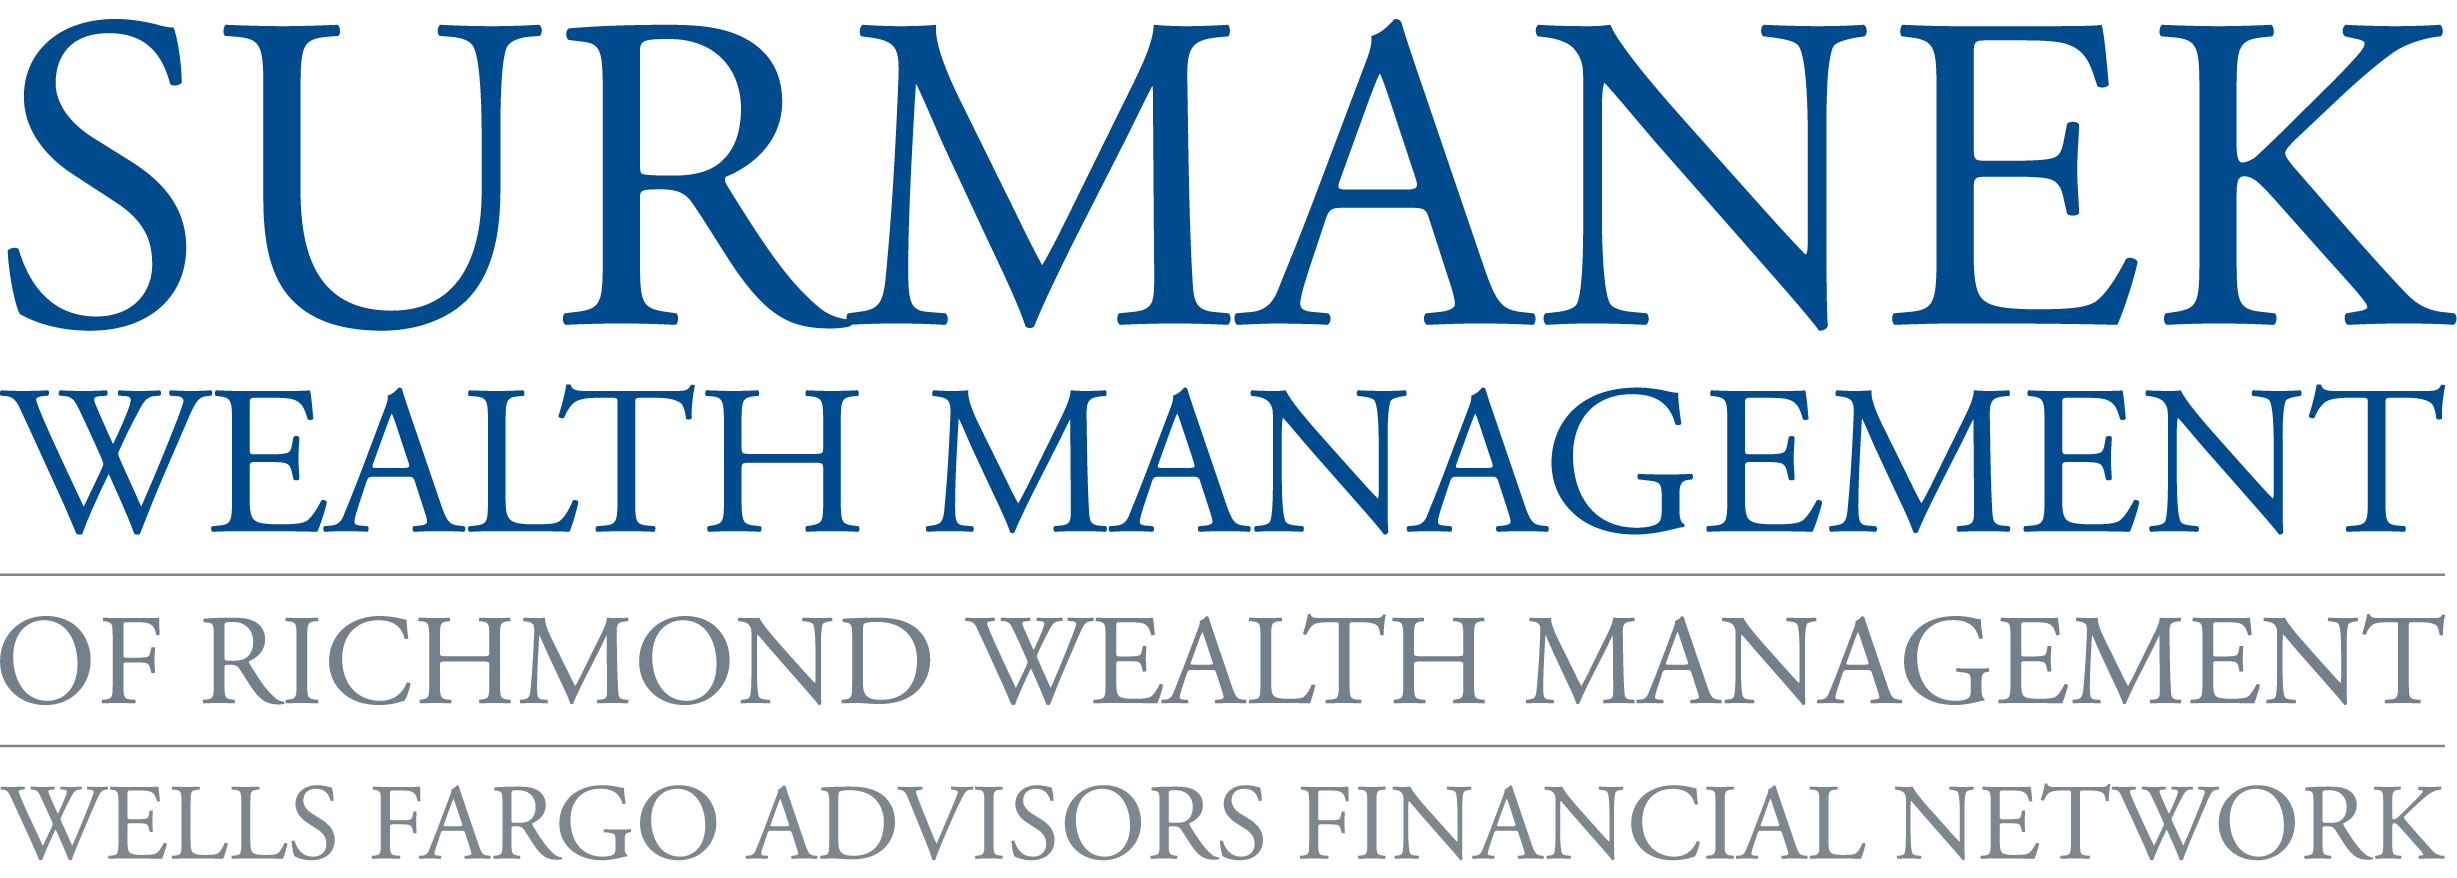 Surmanek Financial Group of Richmond Wealth Management Group_Sub-Brand Logo_FINAL_Color.png